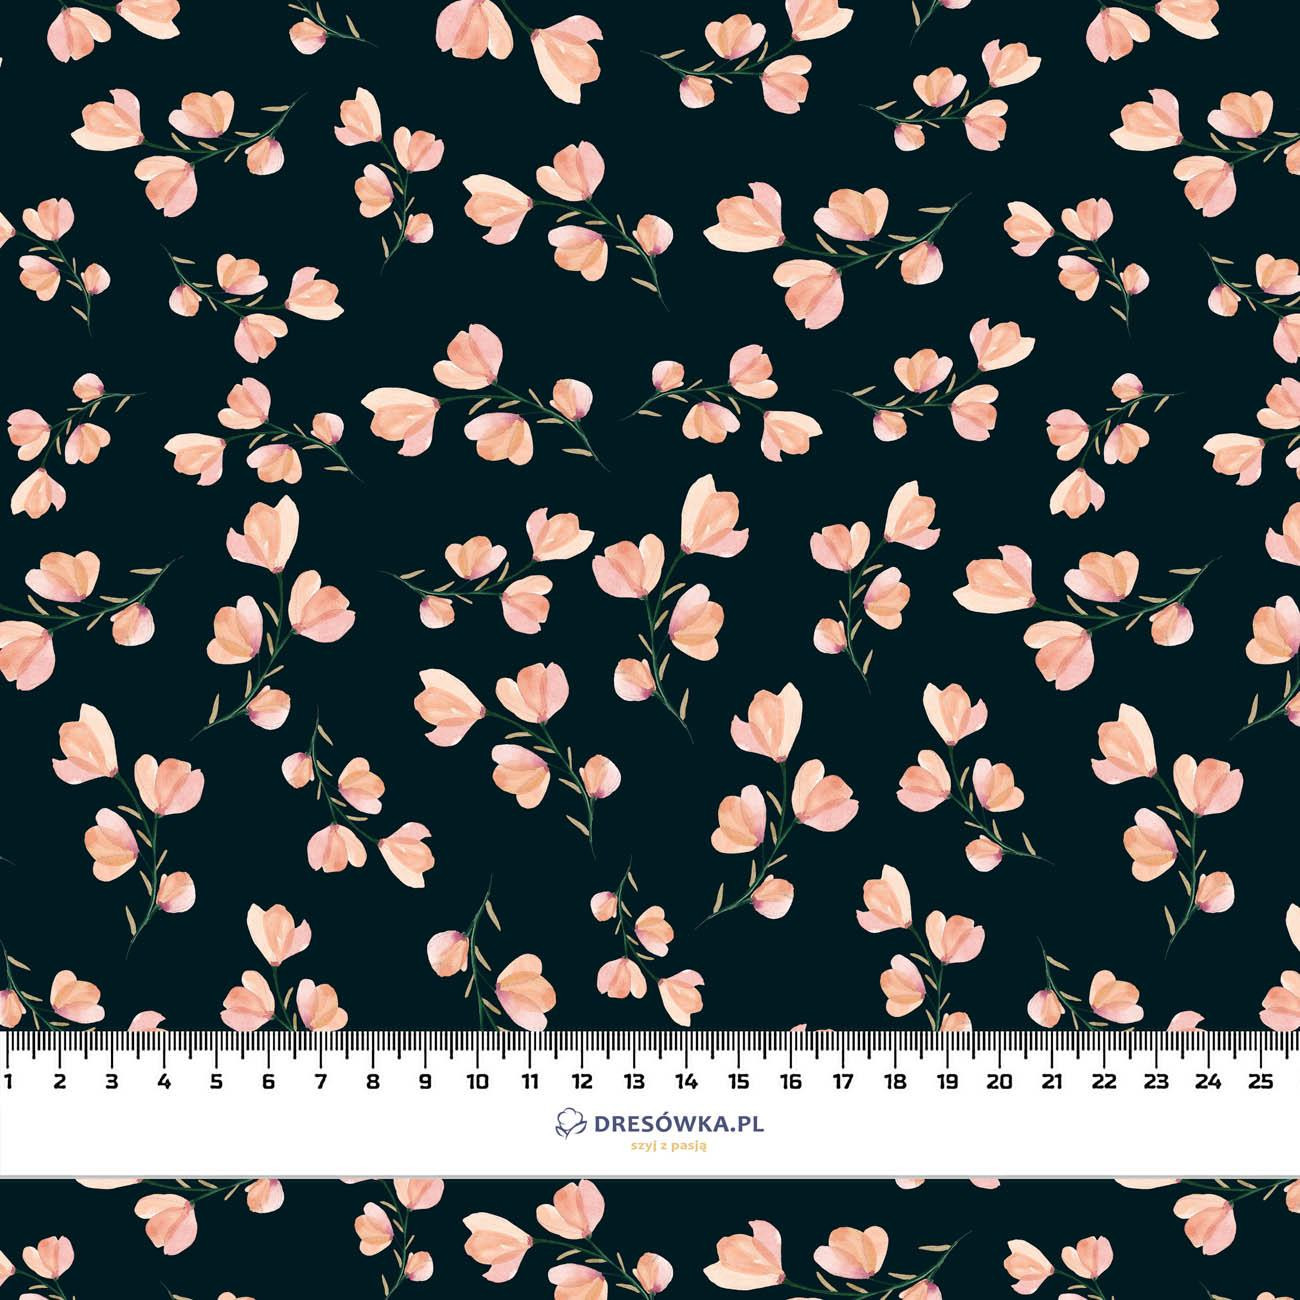 PINK FLOWERS PAT. 4 / black - softshell